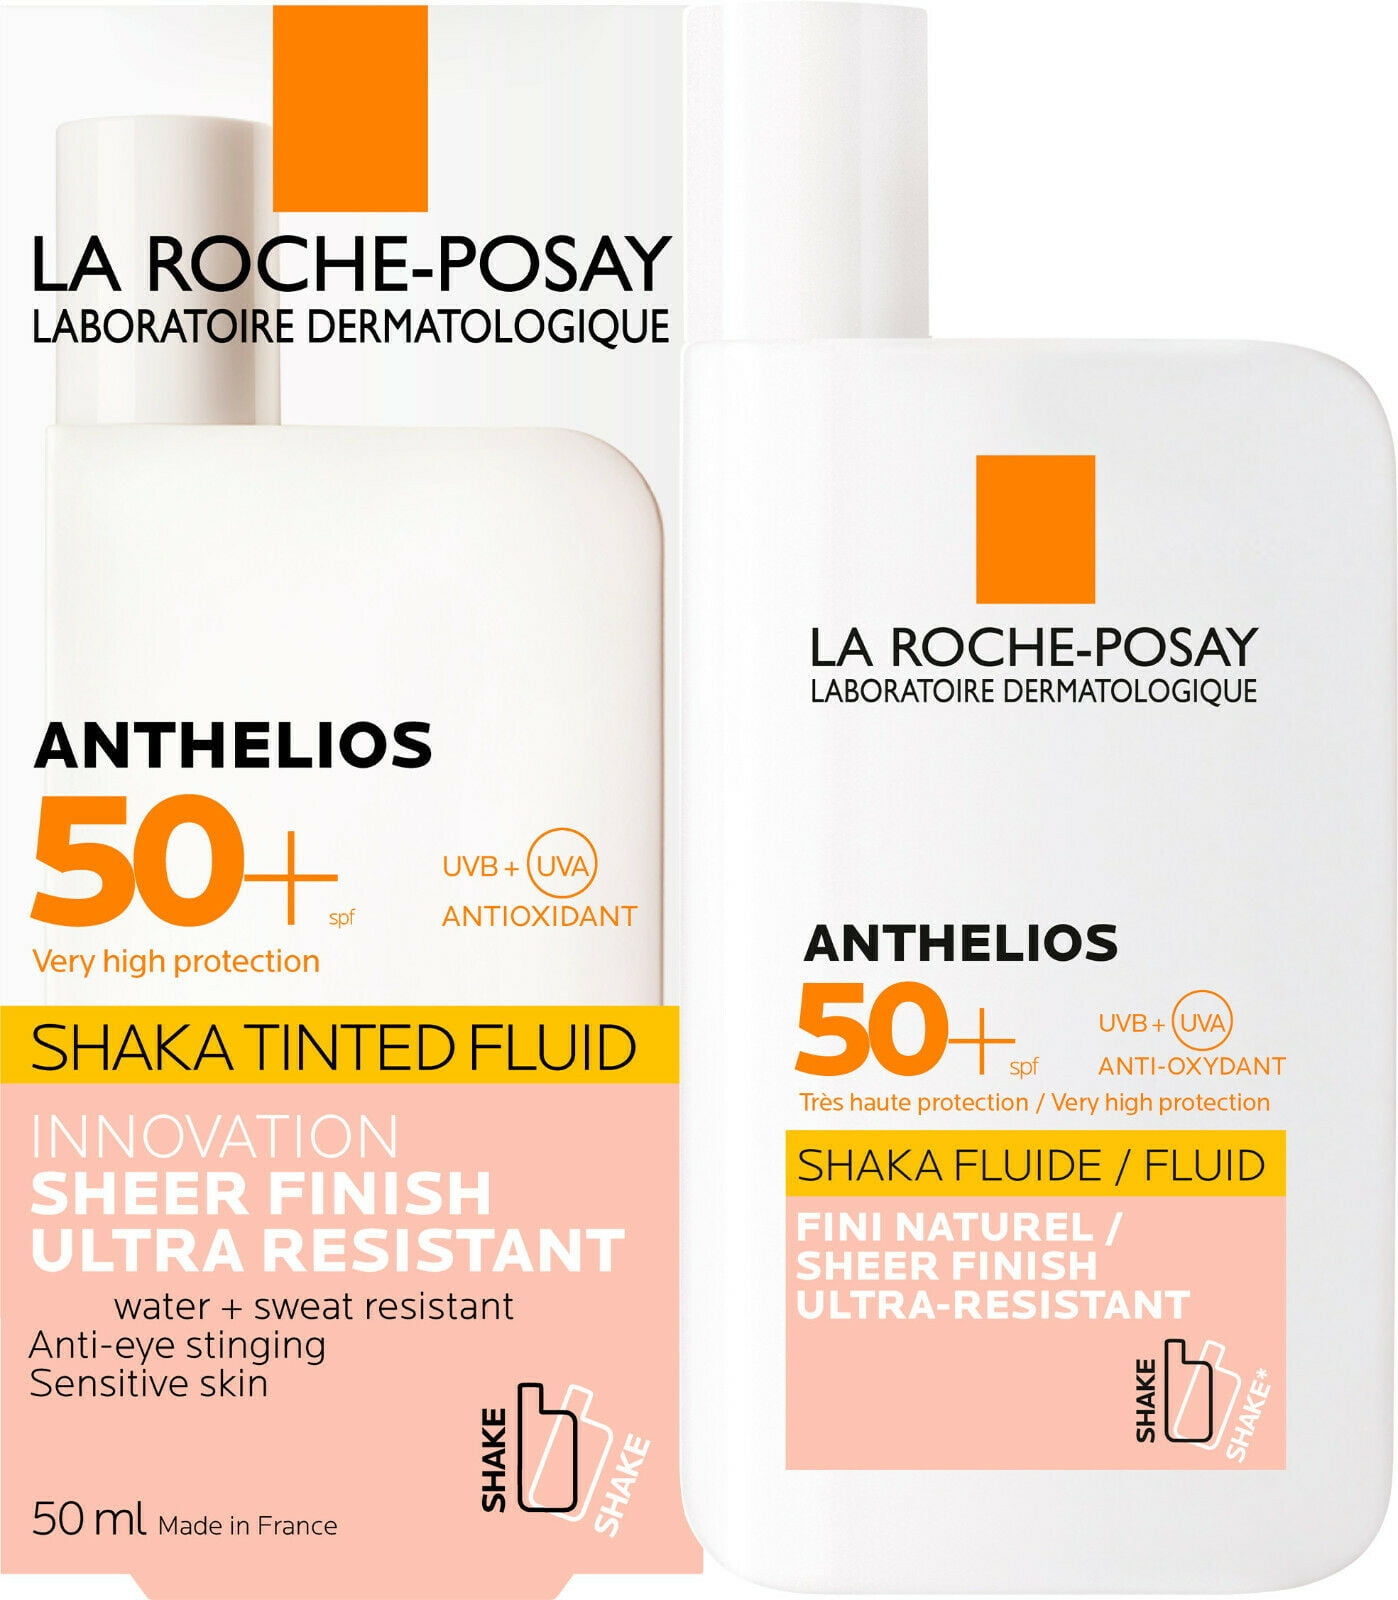 La Roche-Posay Shaka Fluid SPF50, 1.69 oz - Walmart.com